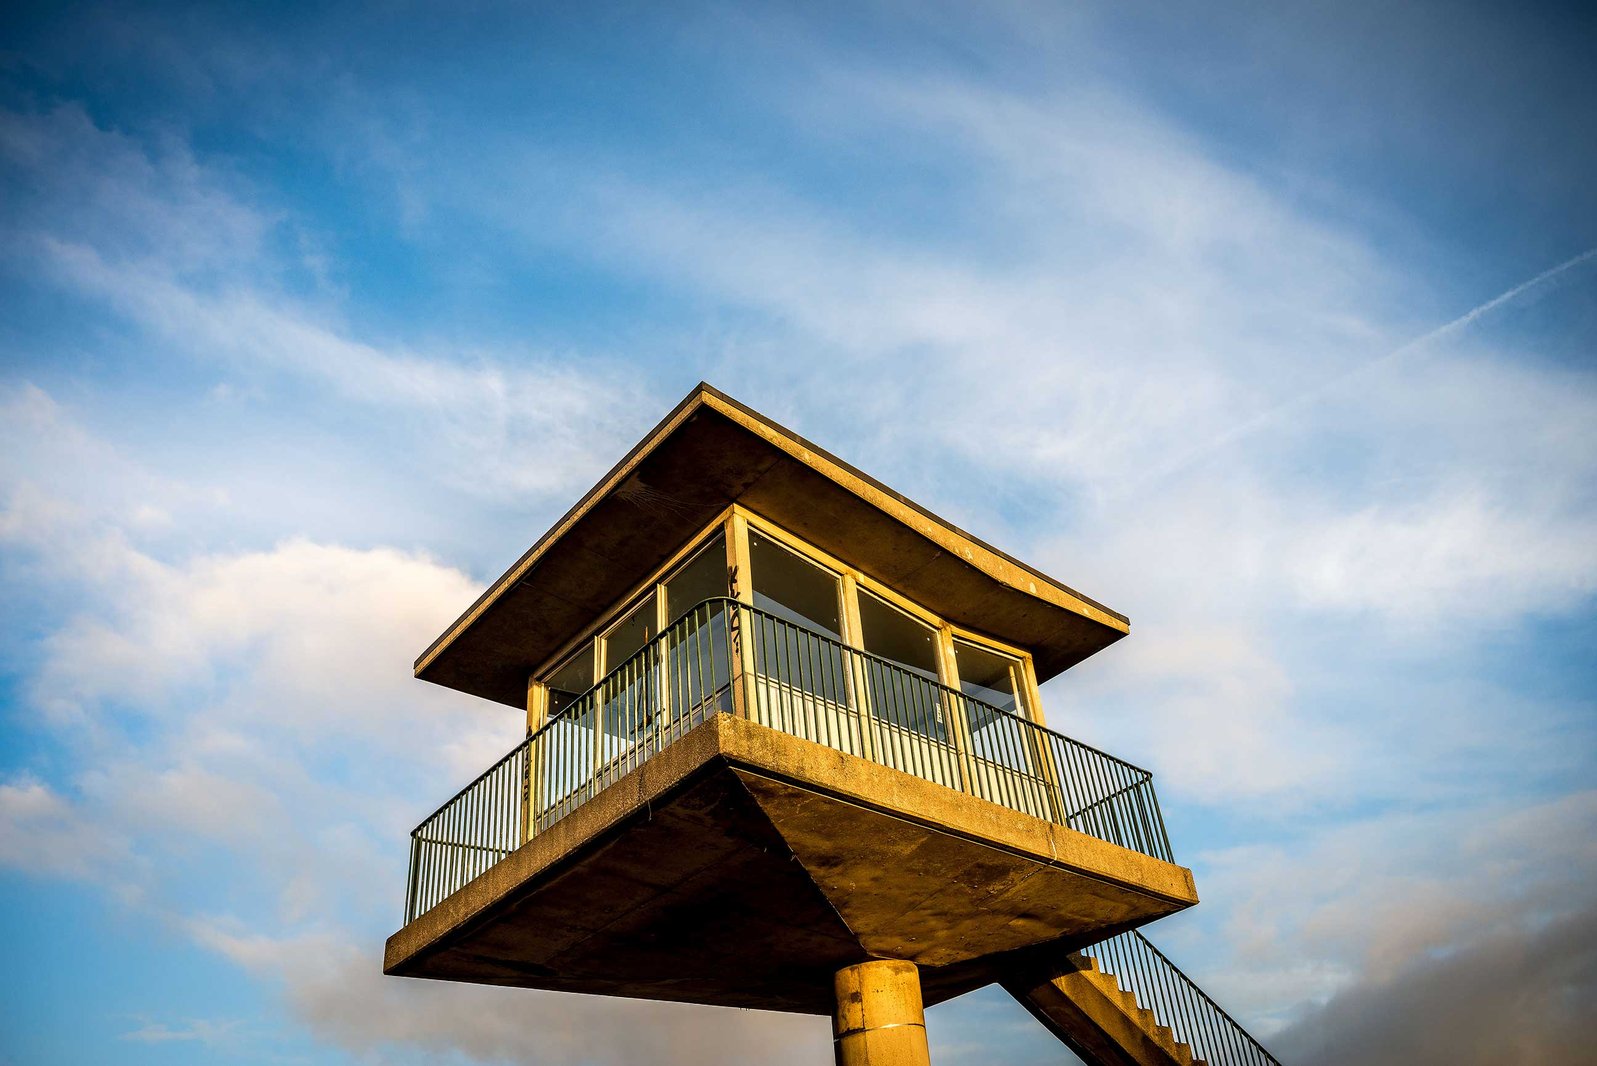 The Plimsoll Swing Bridge Control Tower